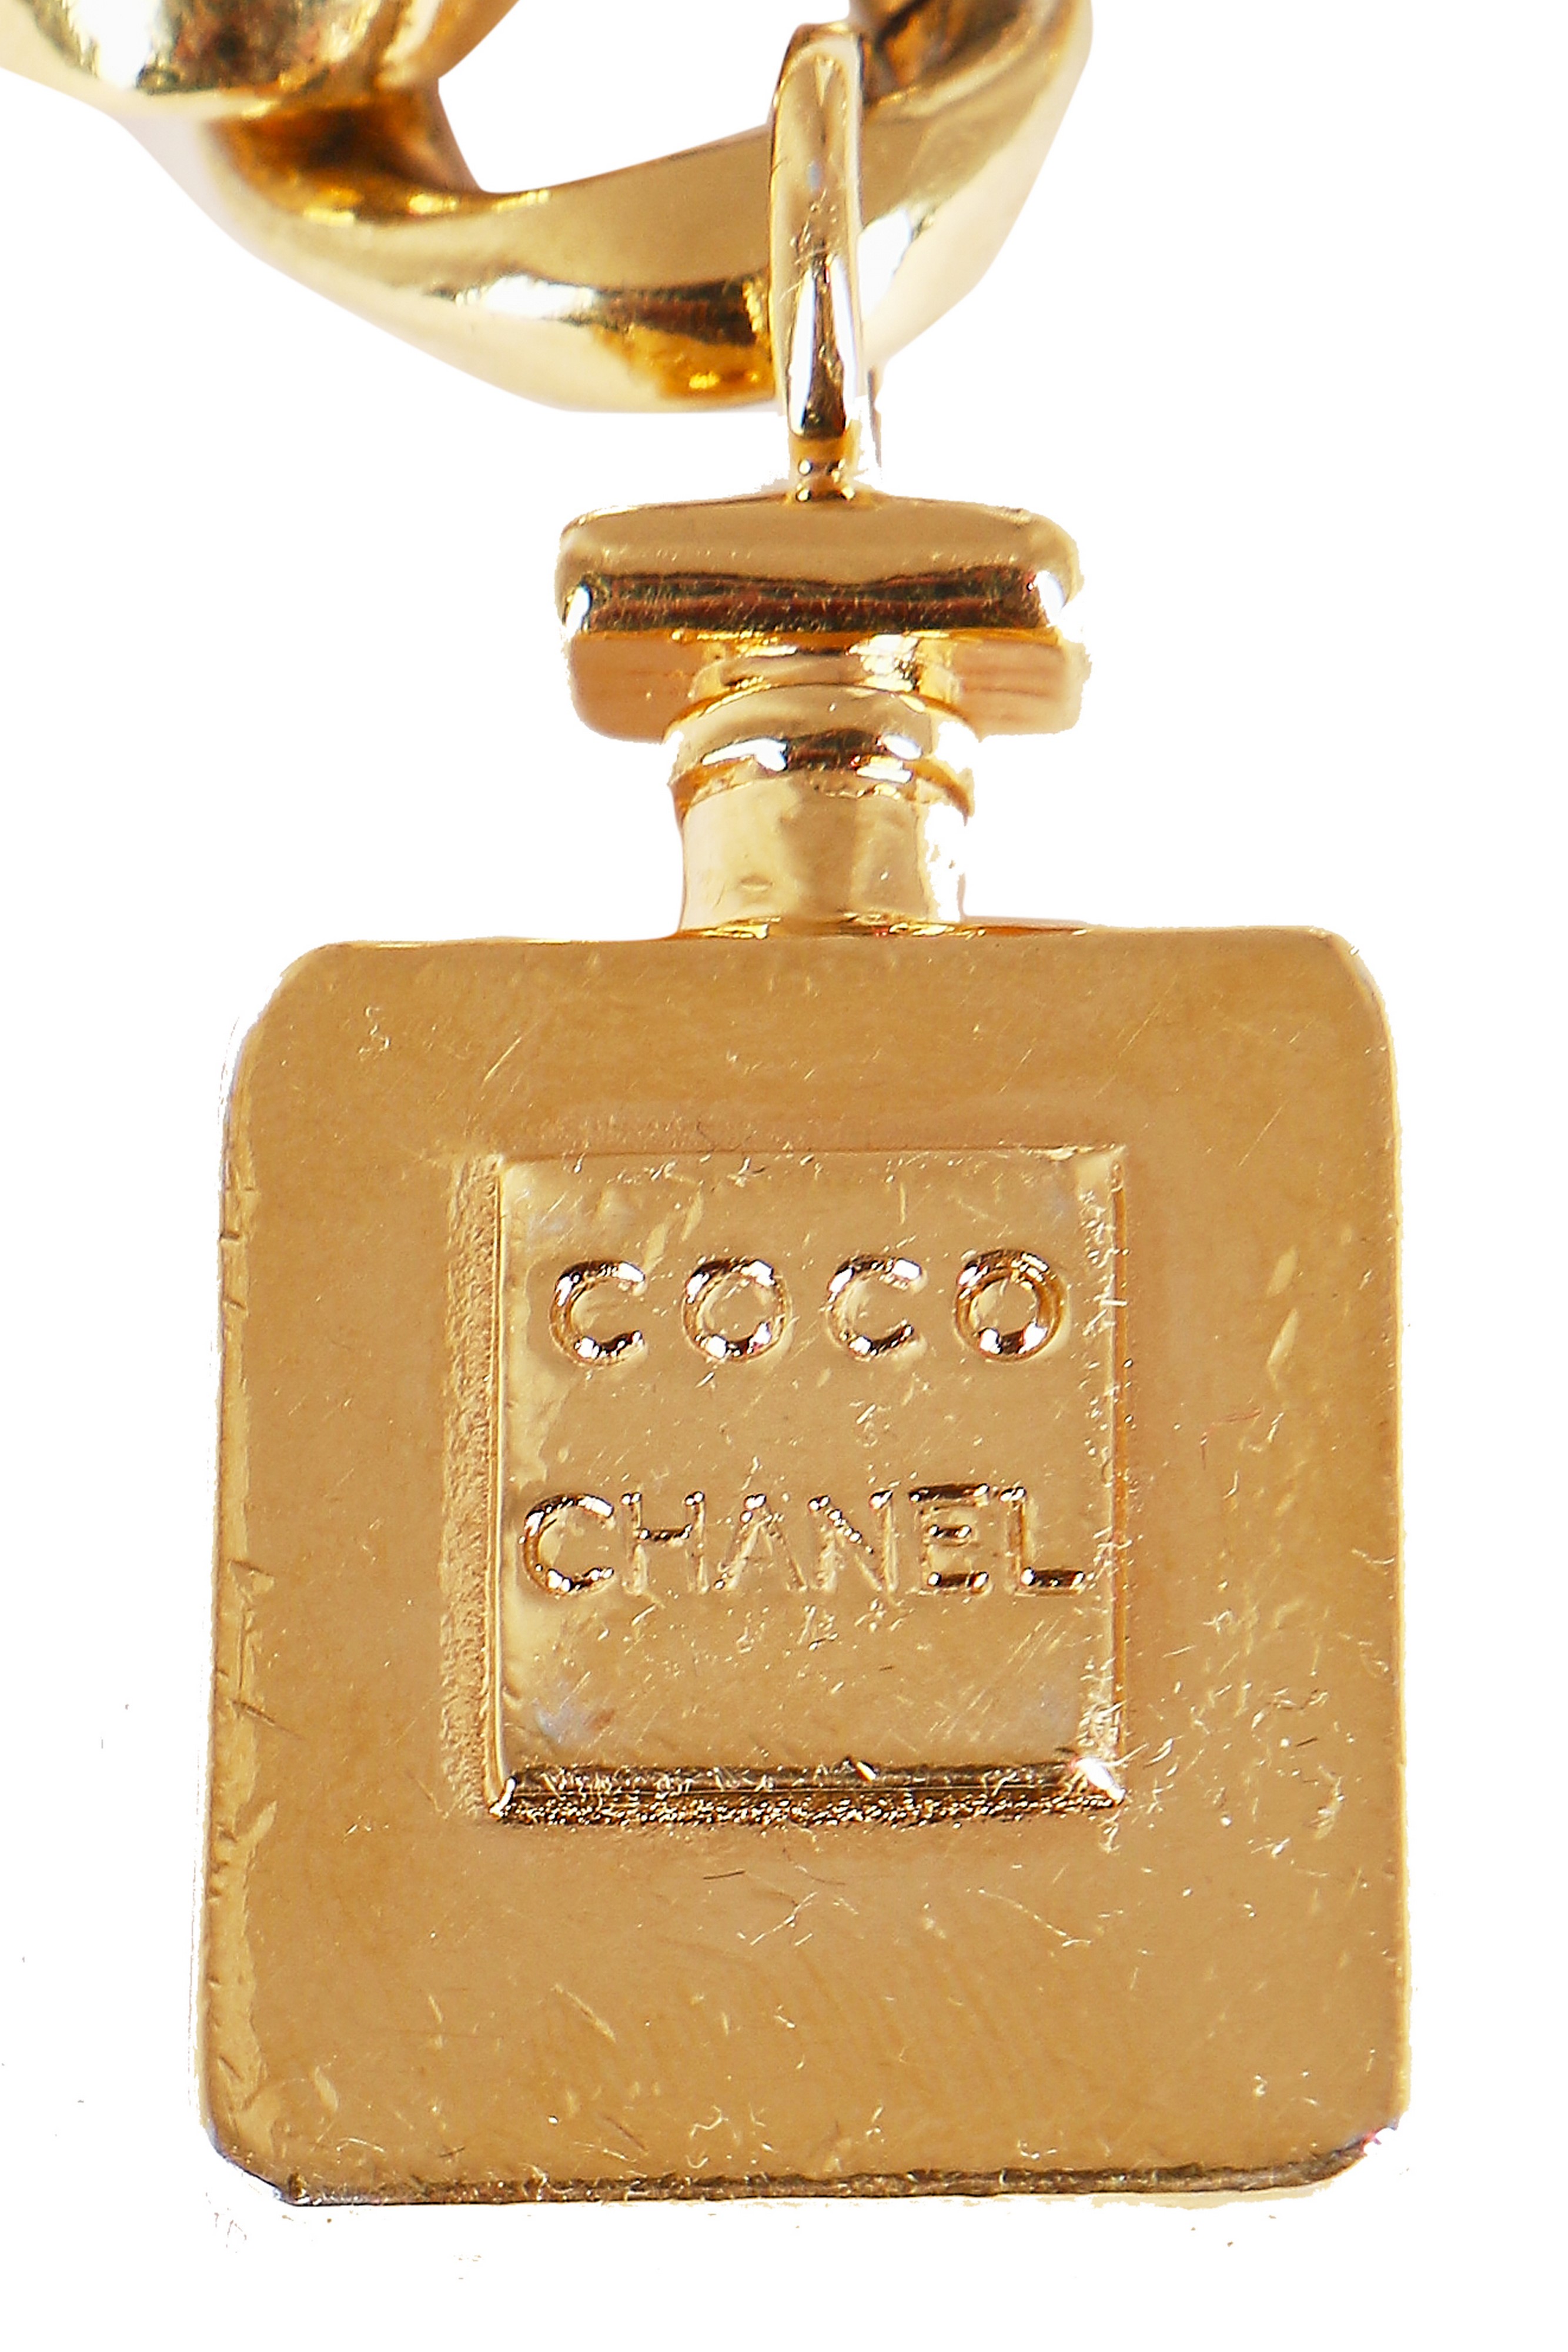 chanel vintage perfume